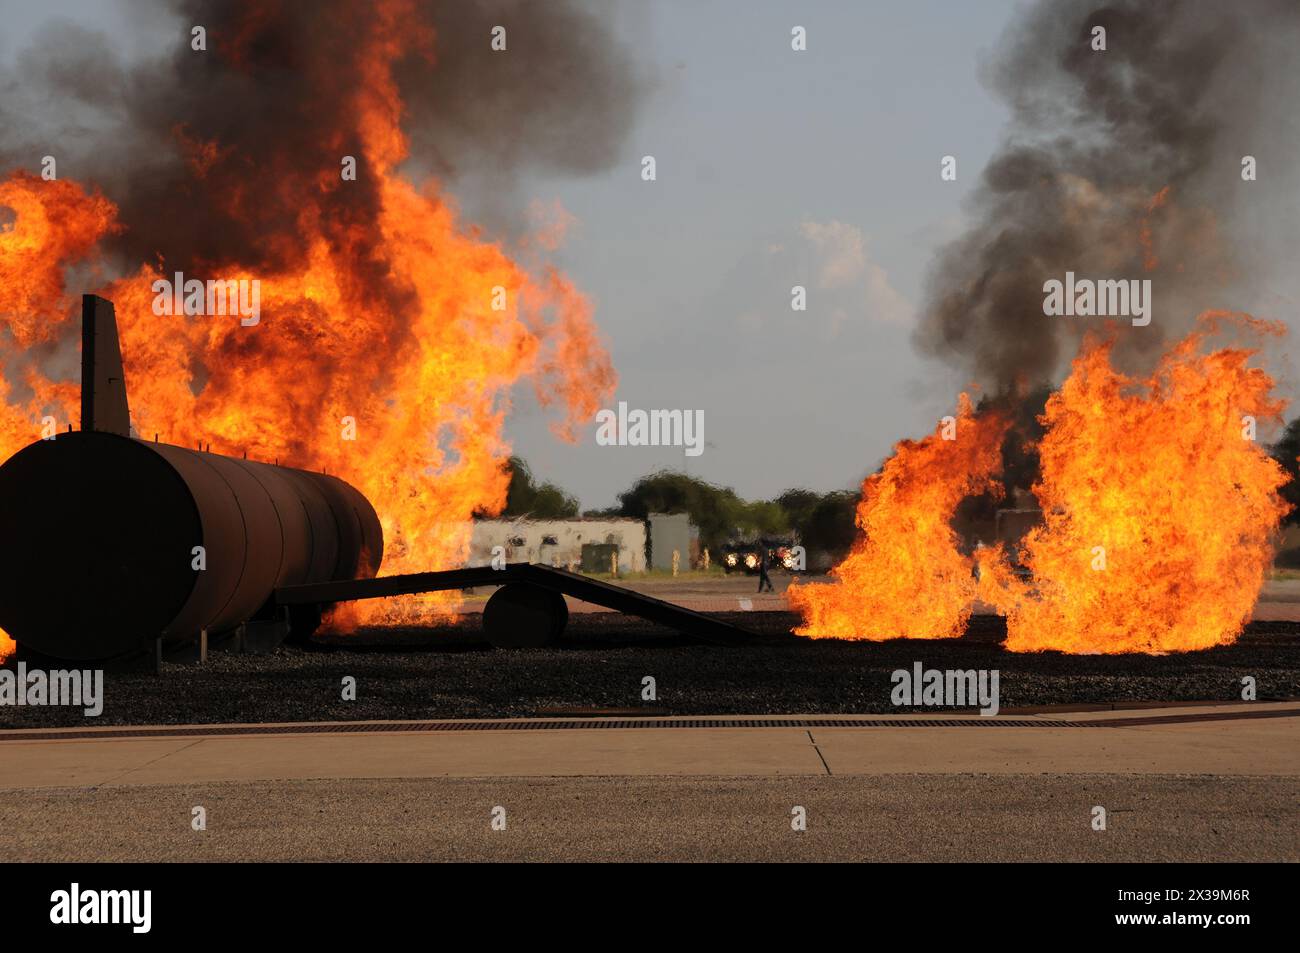 Plane Crash Simulator, Texas Stock Photo